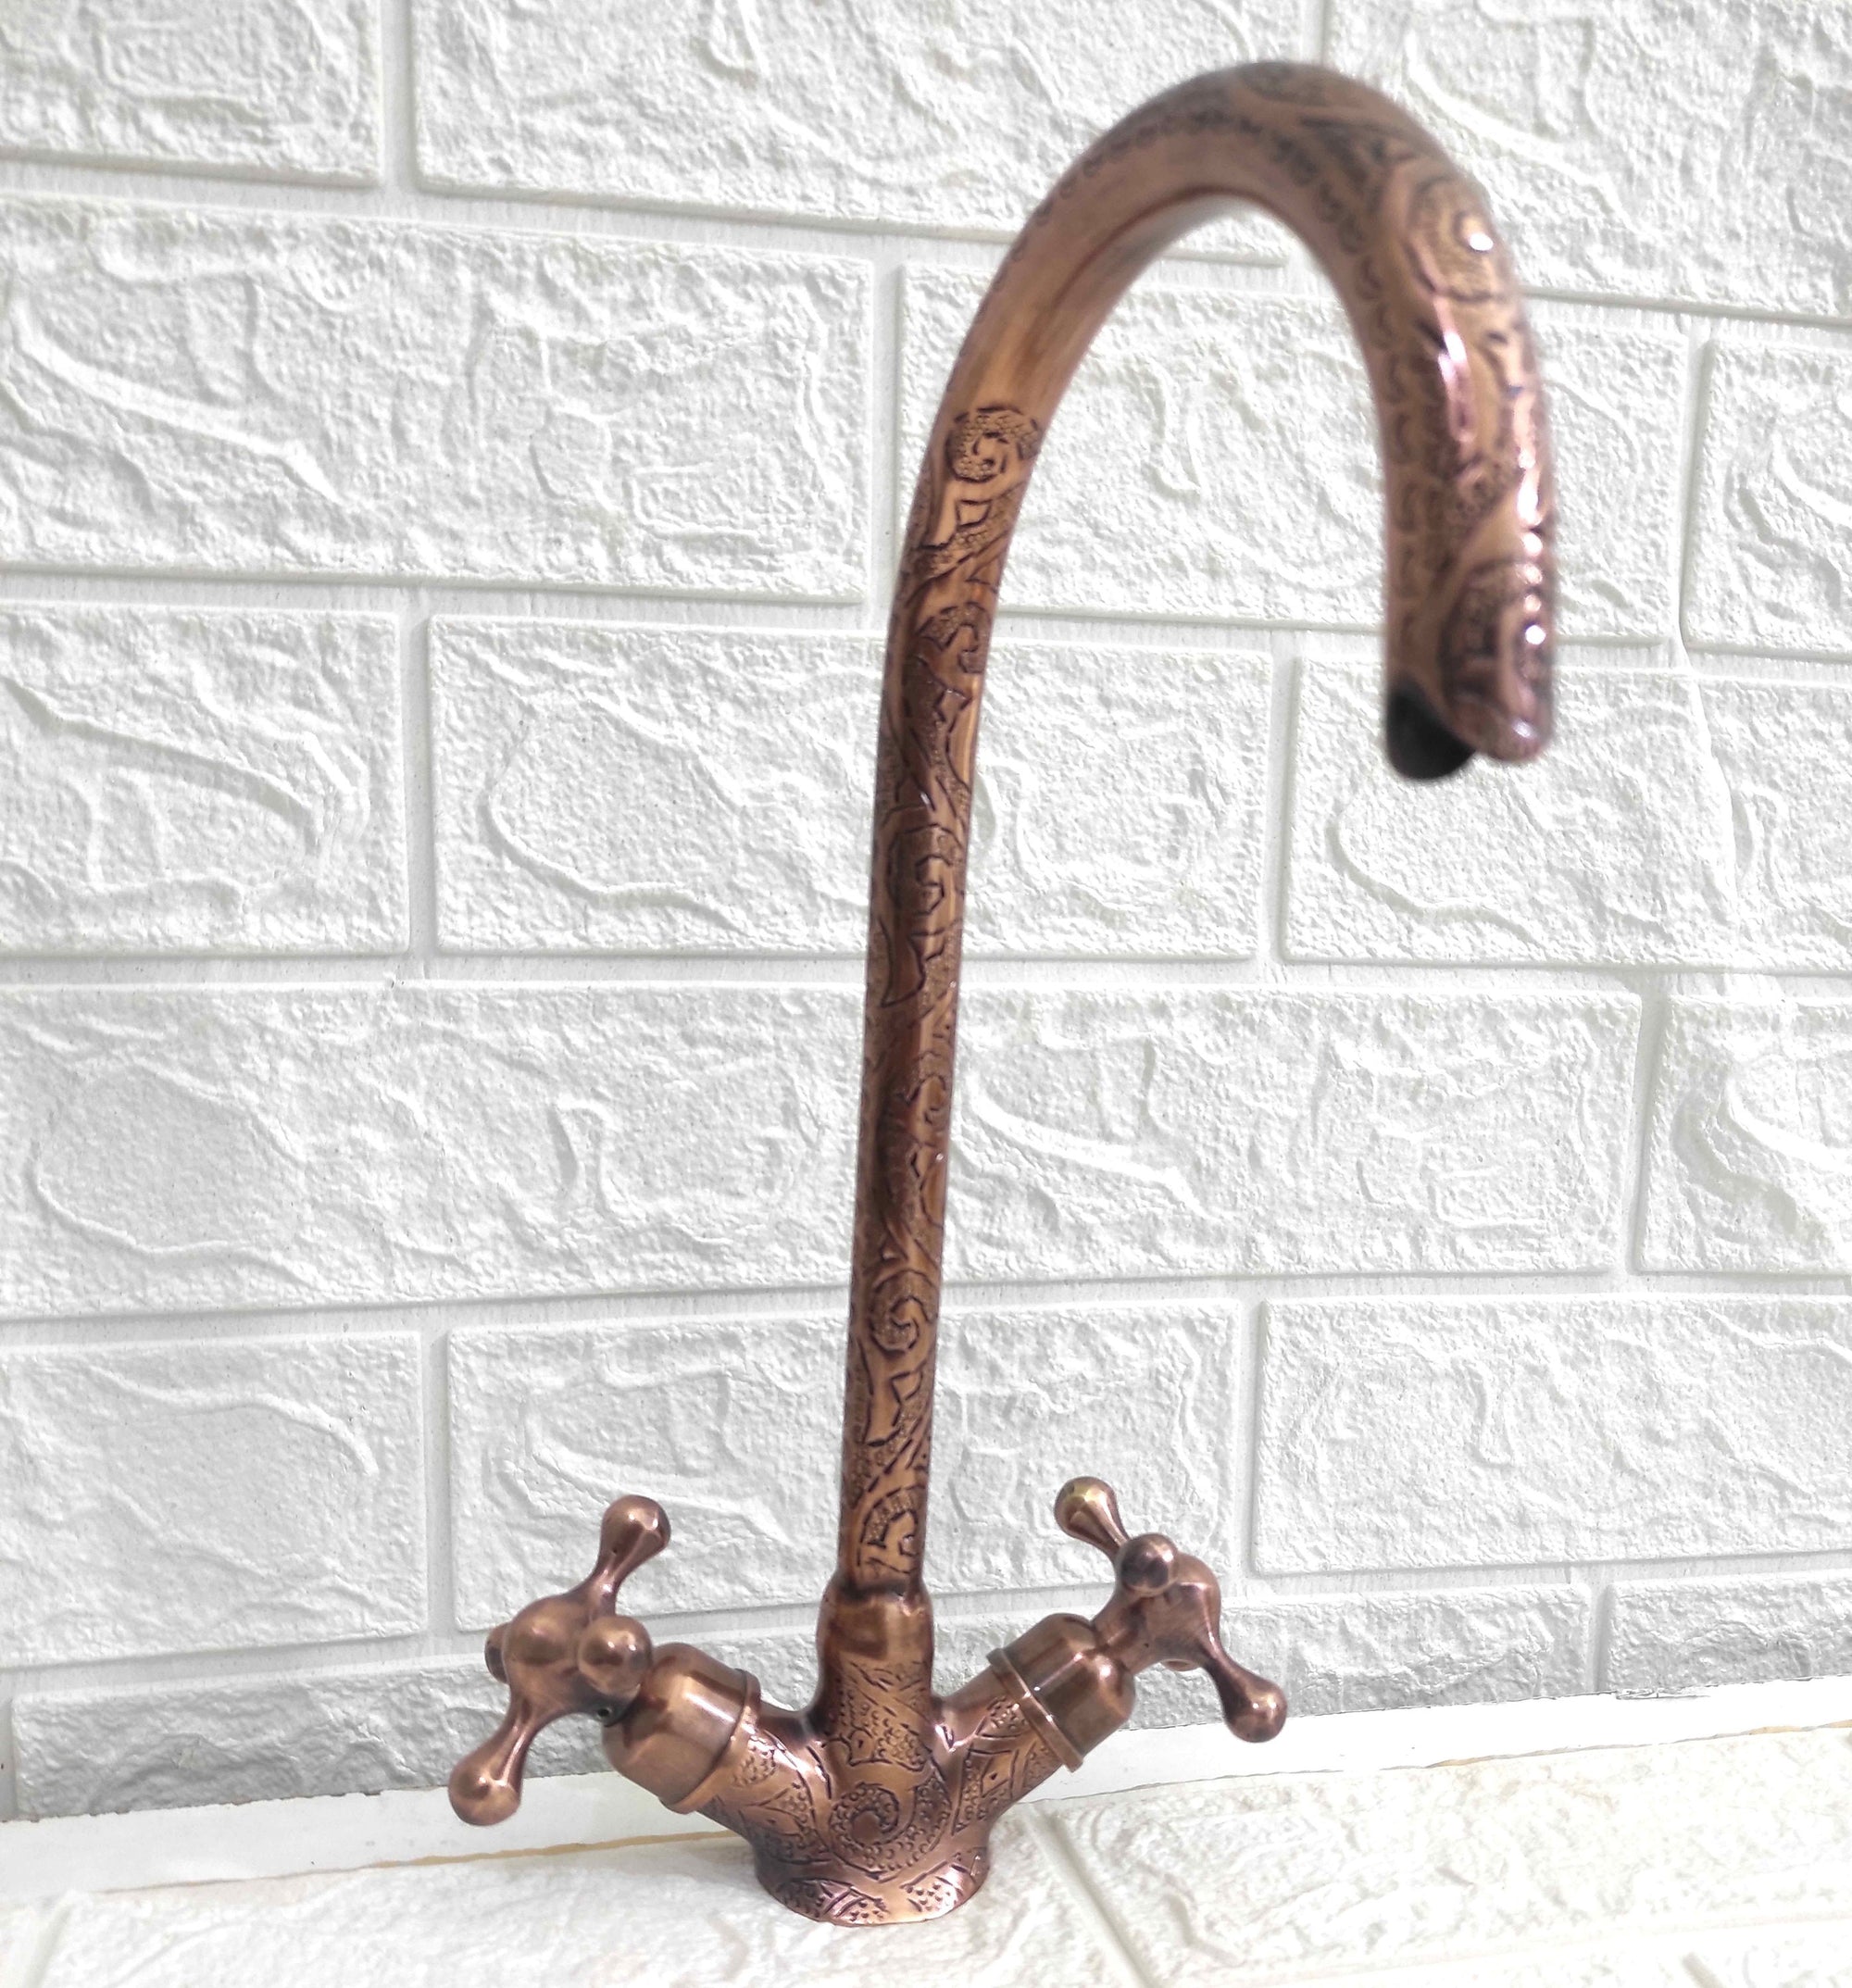 Copper Gooseneck Faucet with Engraved Design